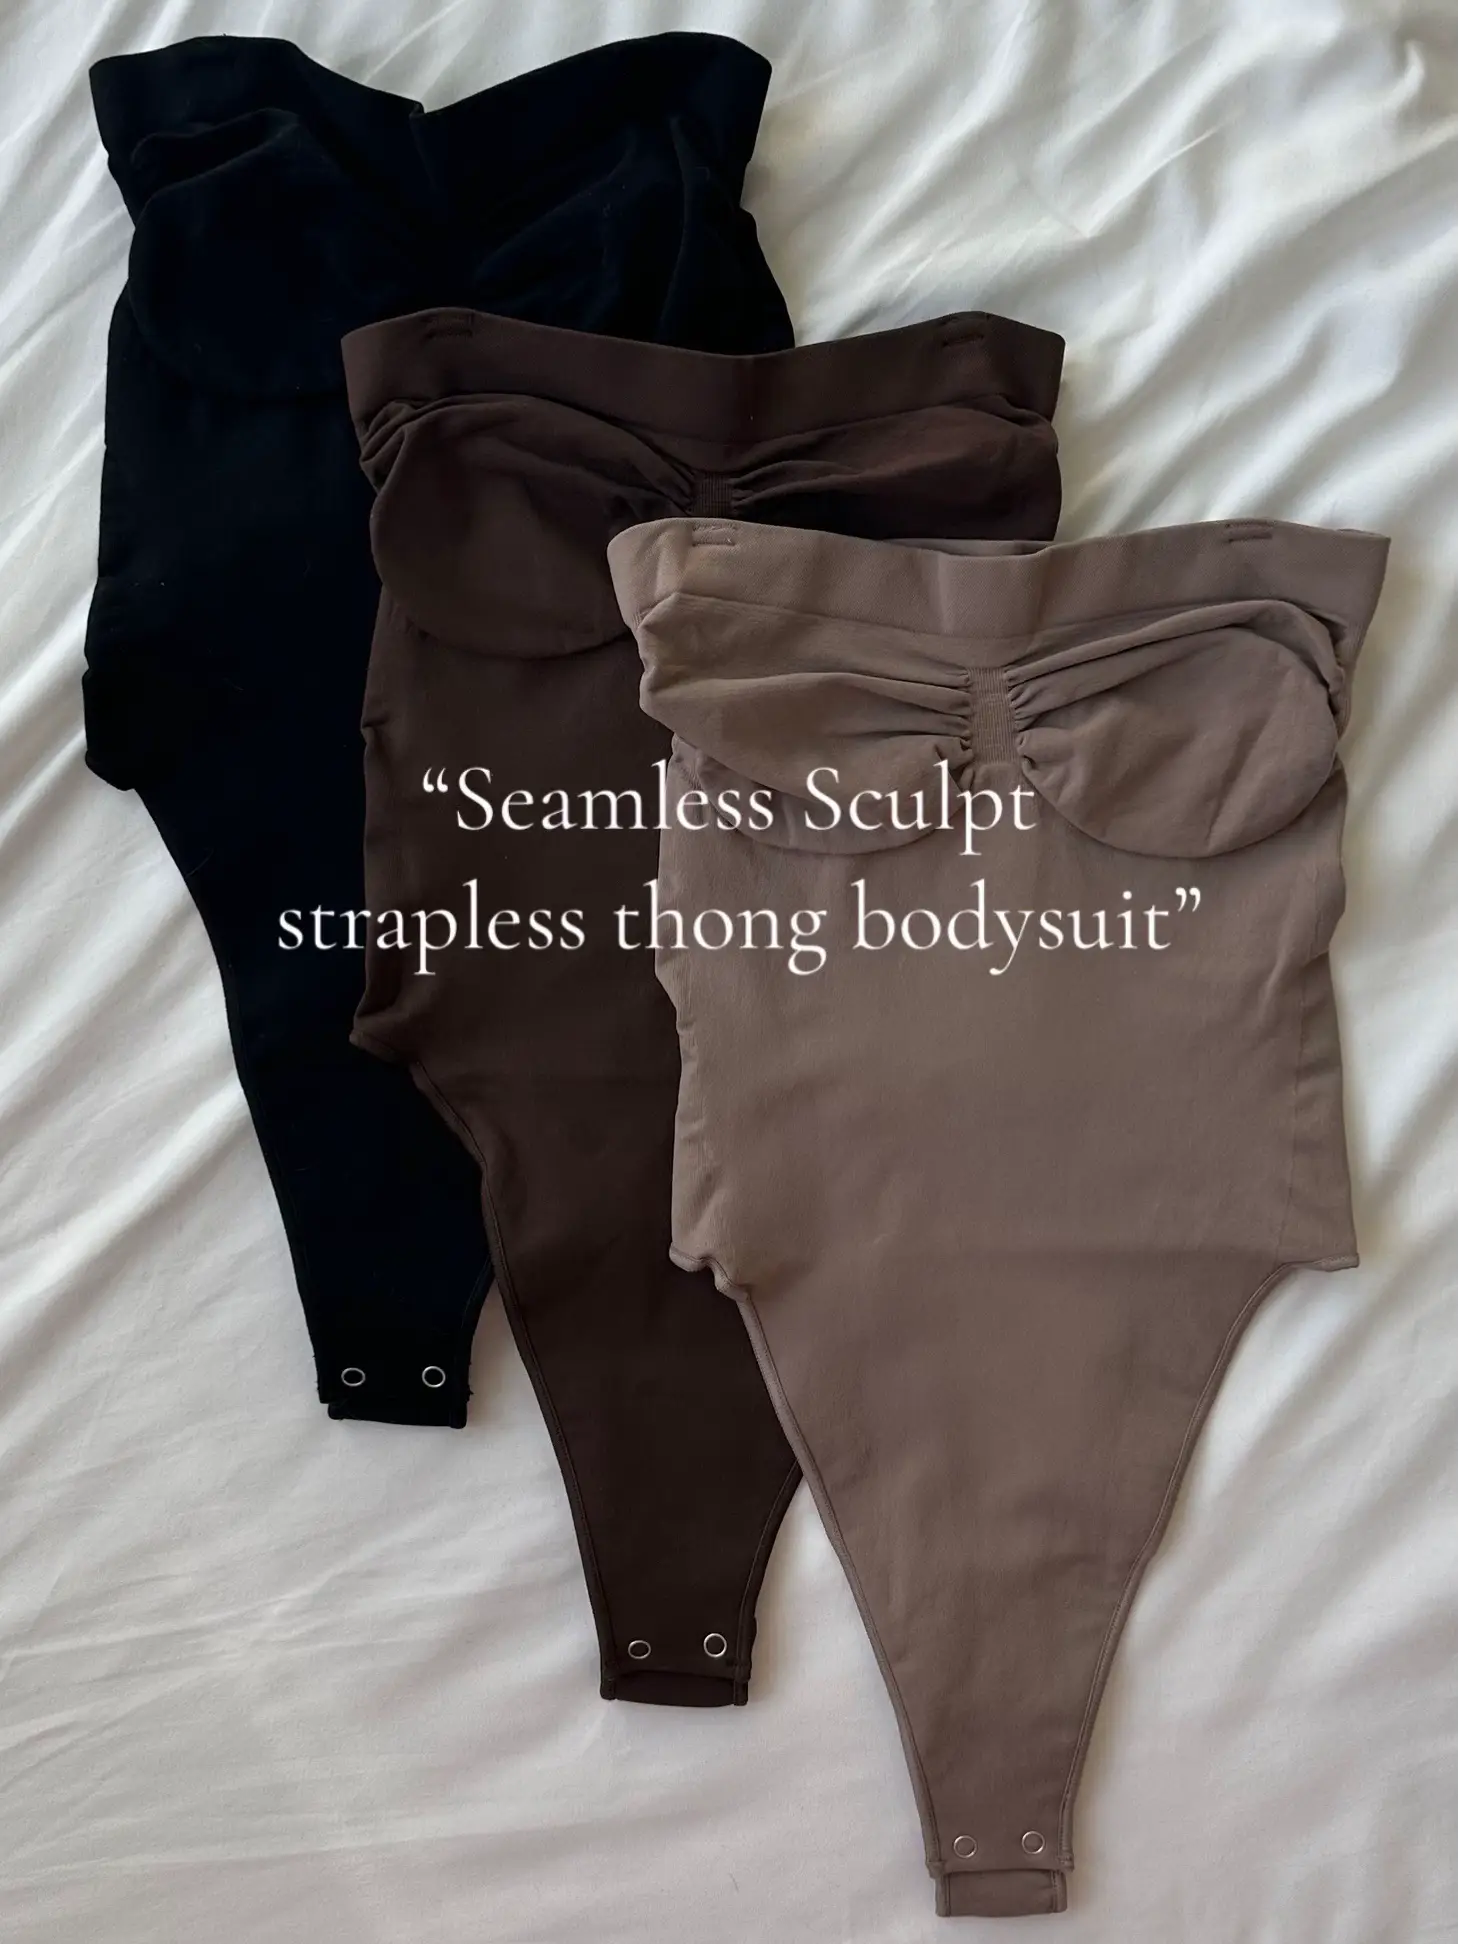 Seamless Sculpt Strapless Thong Bodysuit